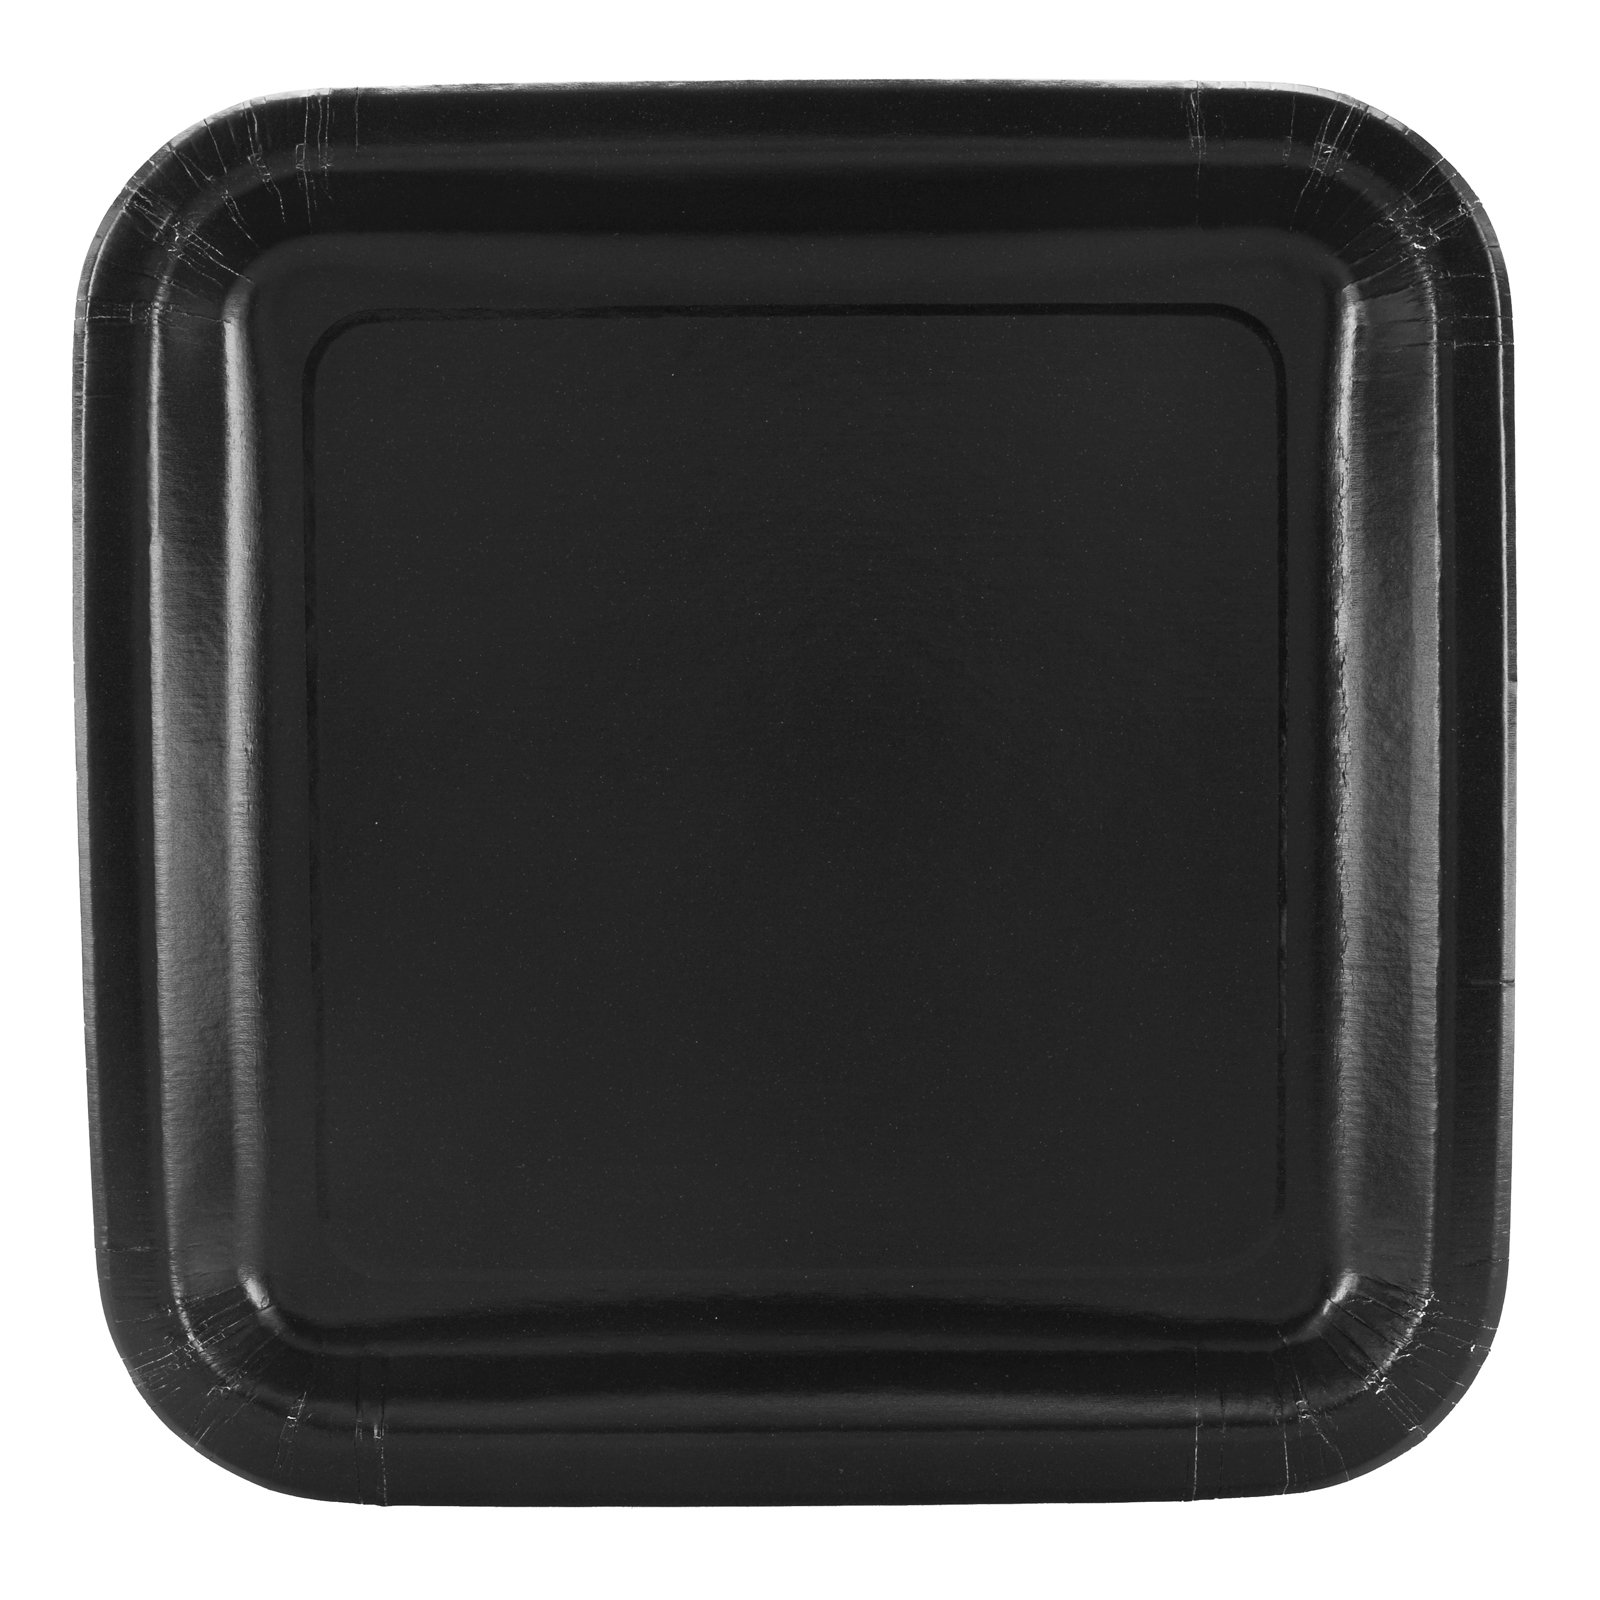 Black Square Dinner Plates (12 count)